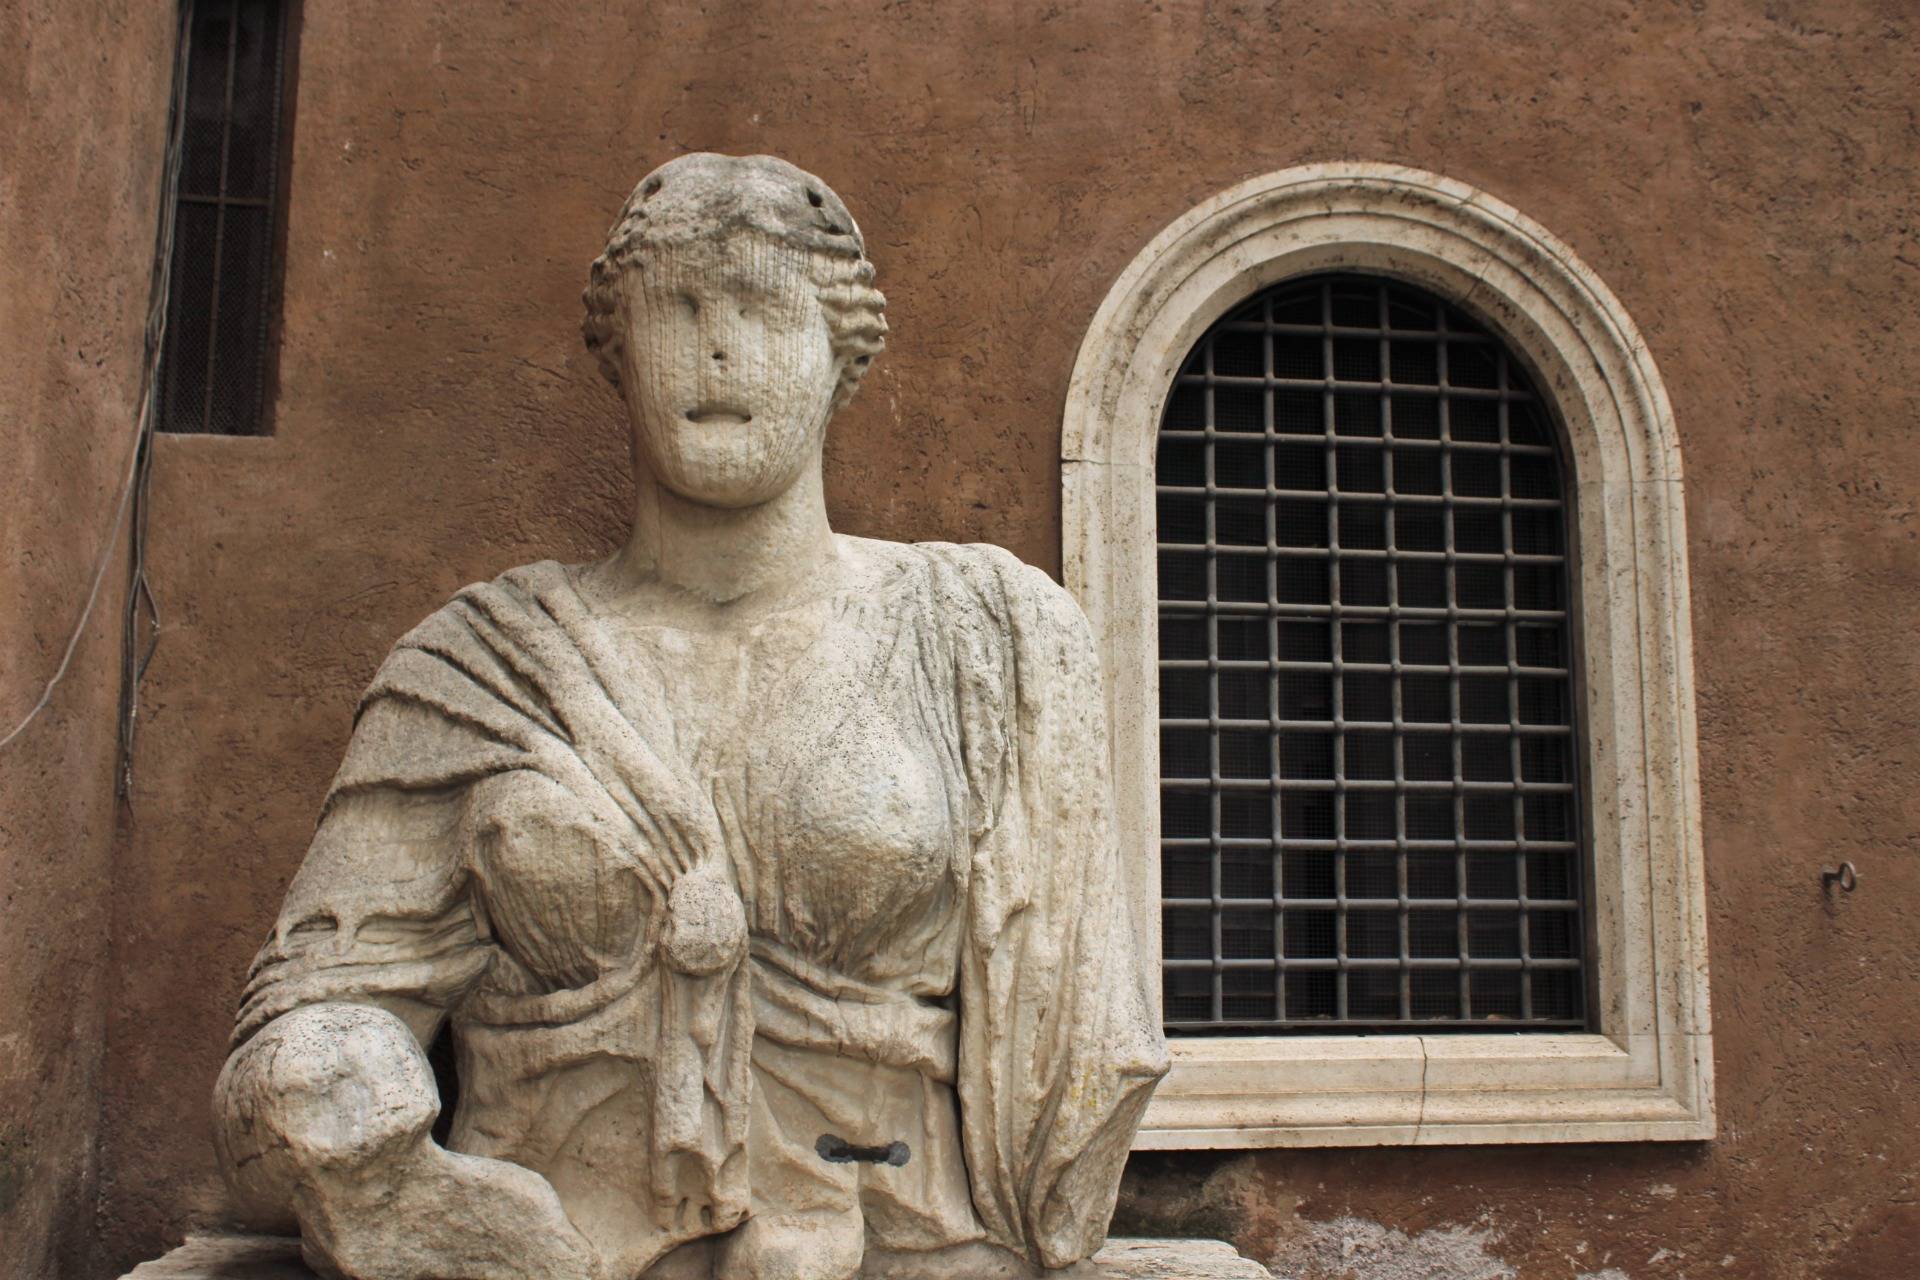 My long weekend in Rome no.7 - Talking statues in Rome